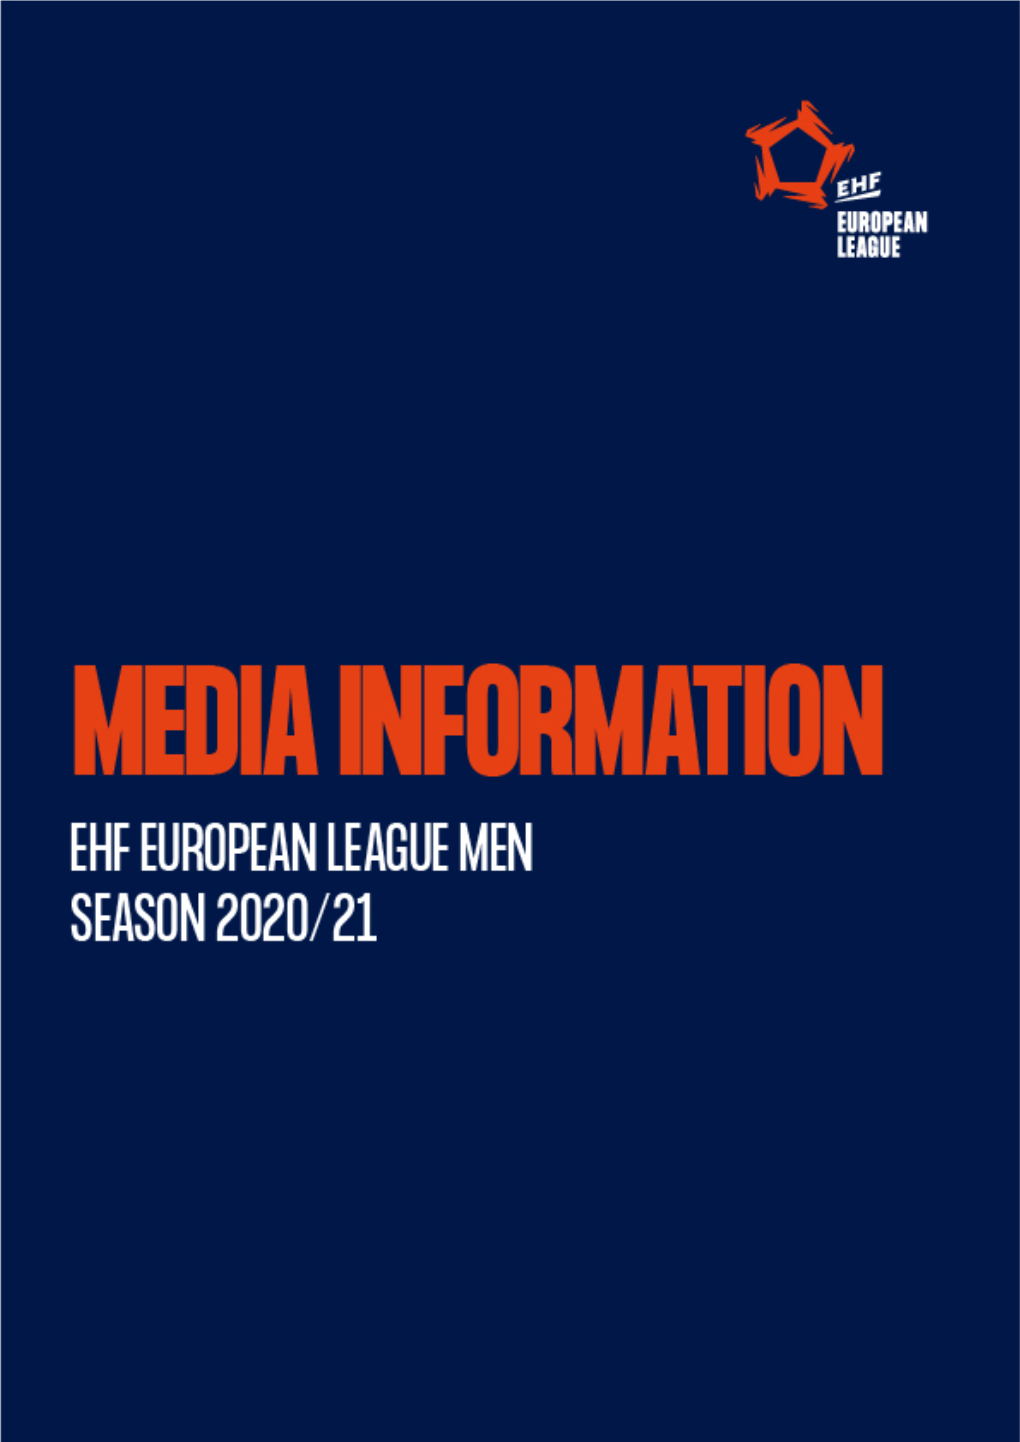 EHF European League Men 2020/21 Season Information 474.7 Kb